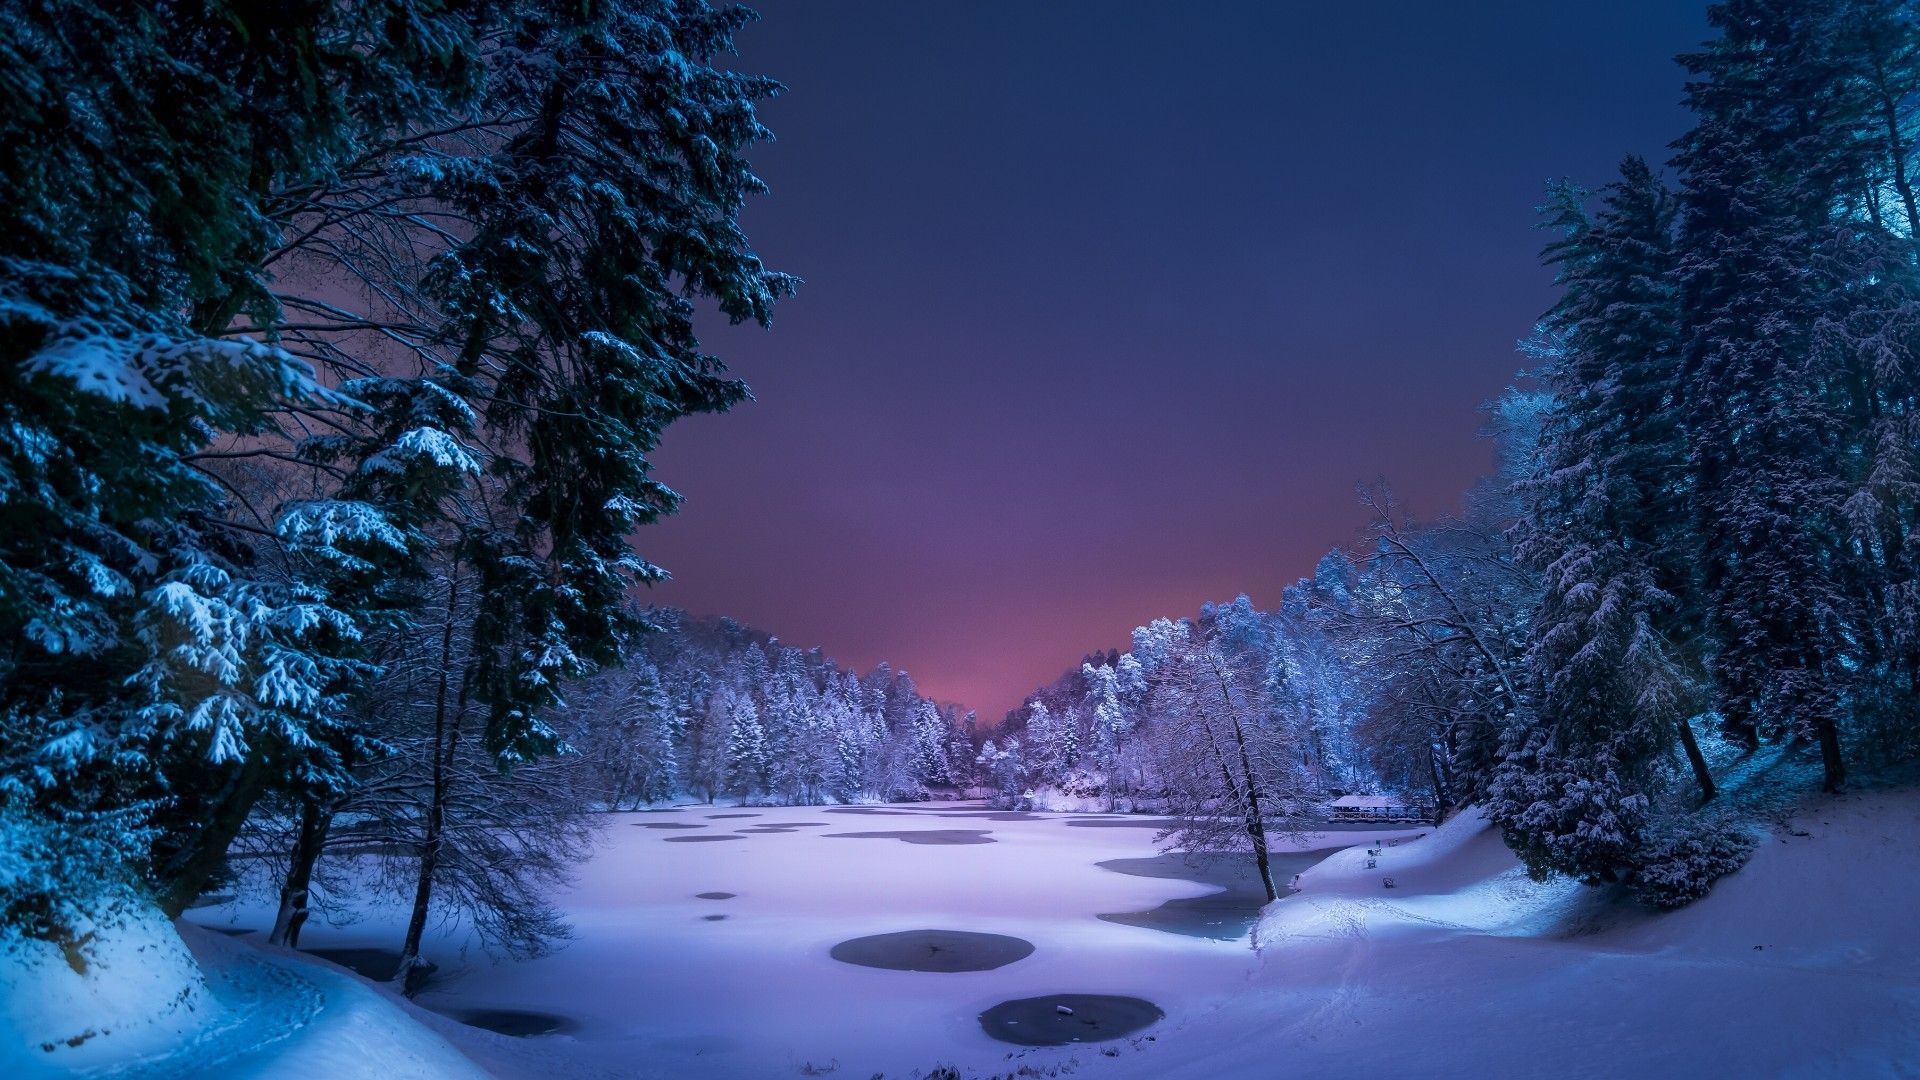 Winter Forest Night Wallpaper Picture On Wallpaper 1080p HD. Winter landscape, Winter desktop background, Night landscape